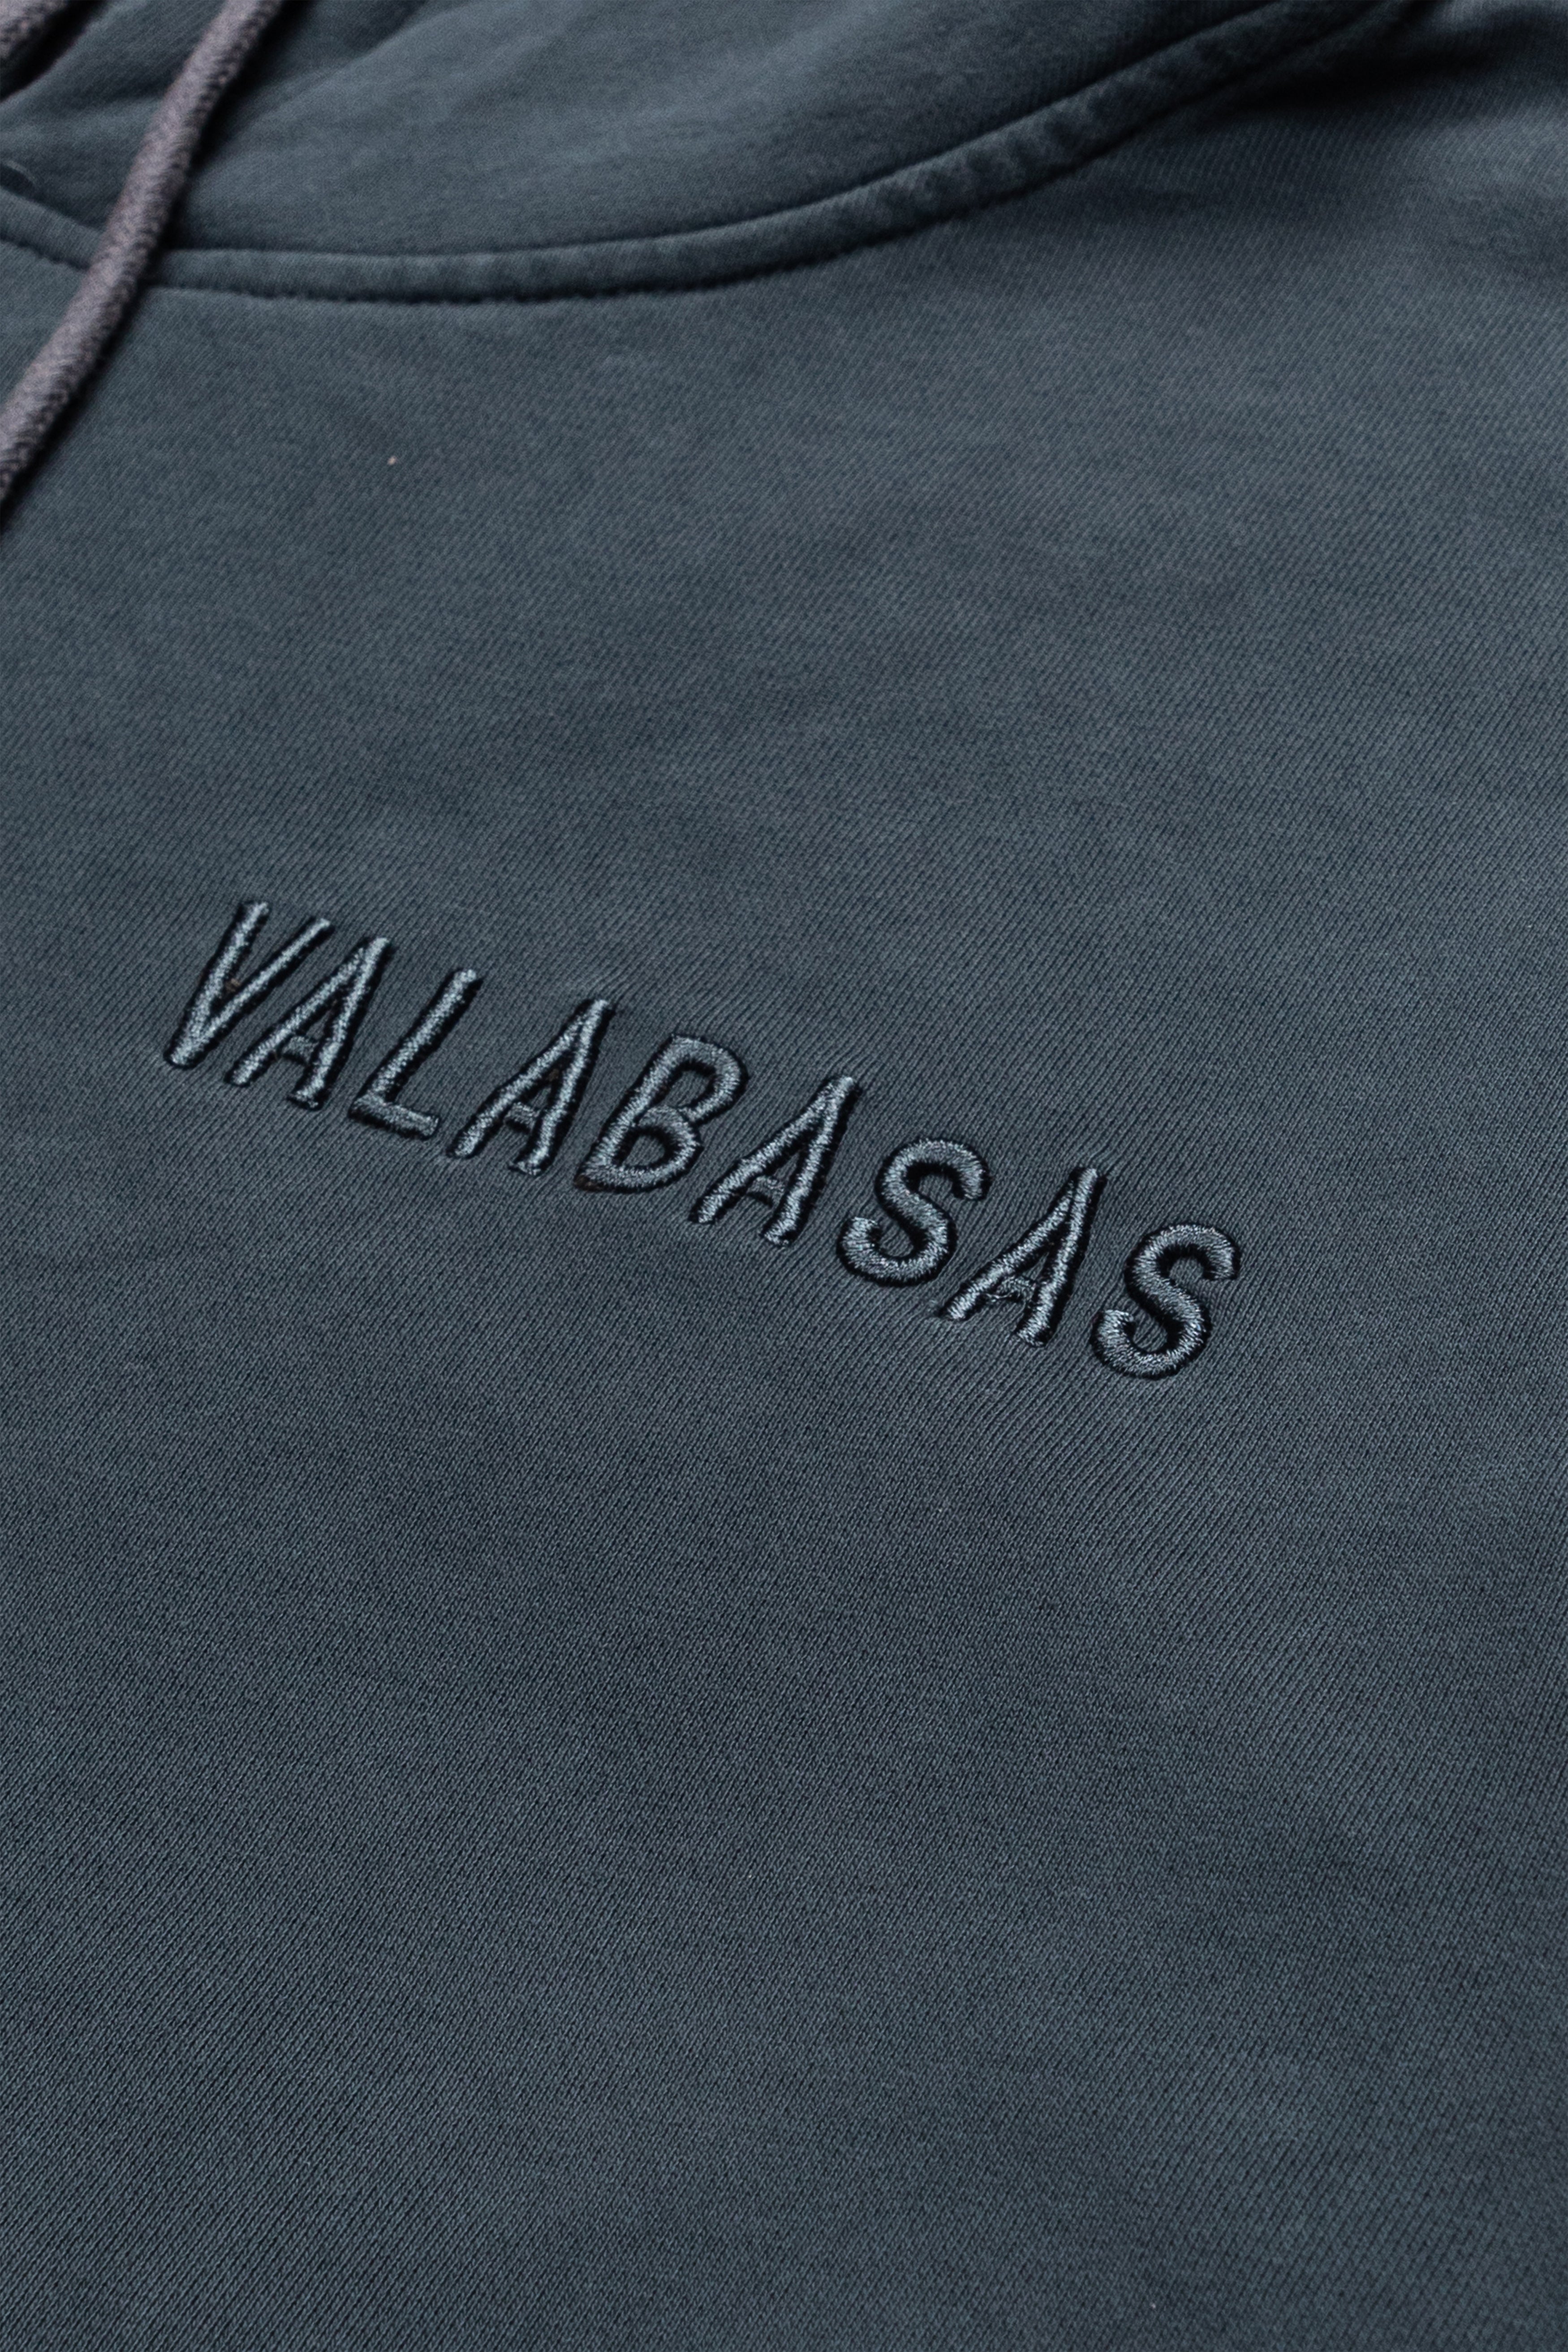 Metro Fusion - Valabasas 'Vala-Ascent' Fleece Set - Men's Sweatsuits